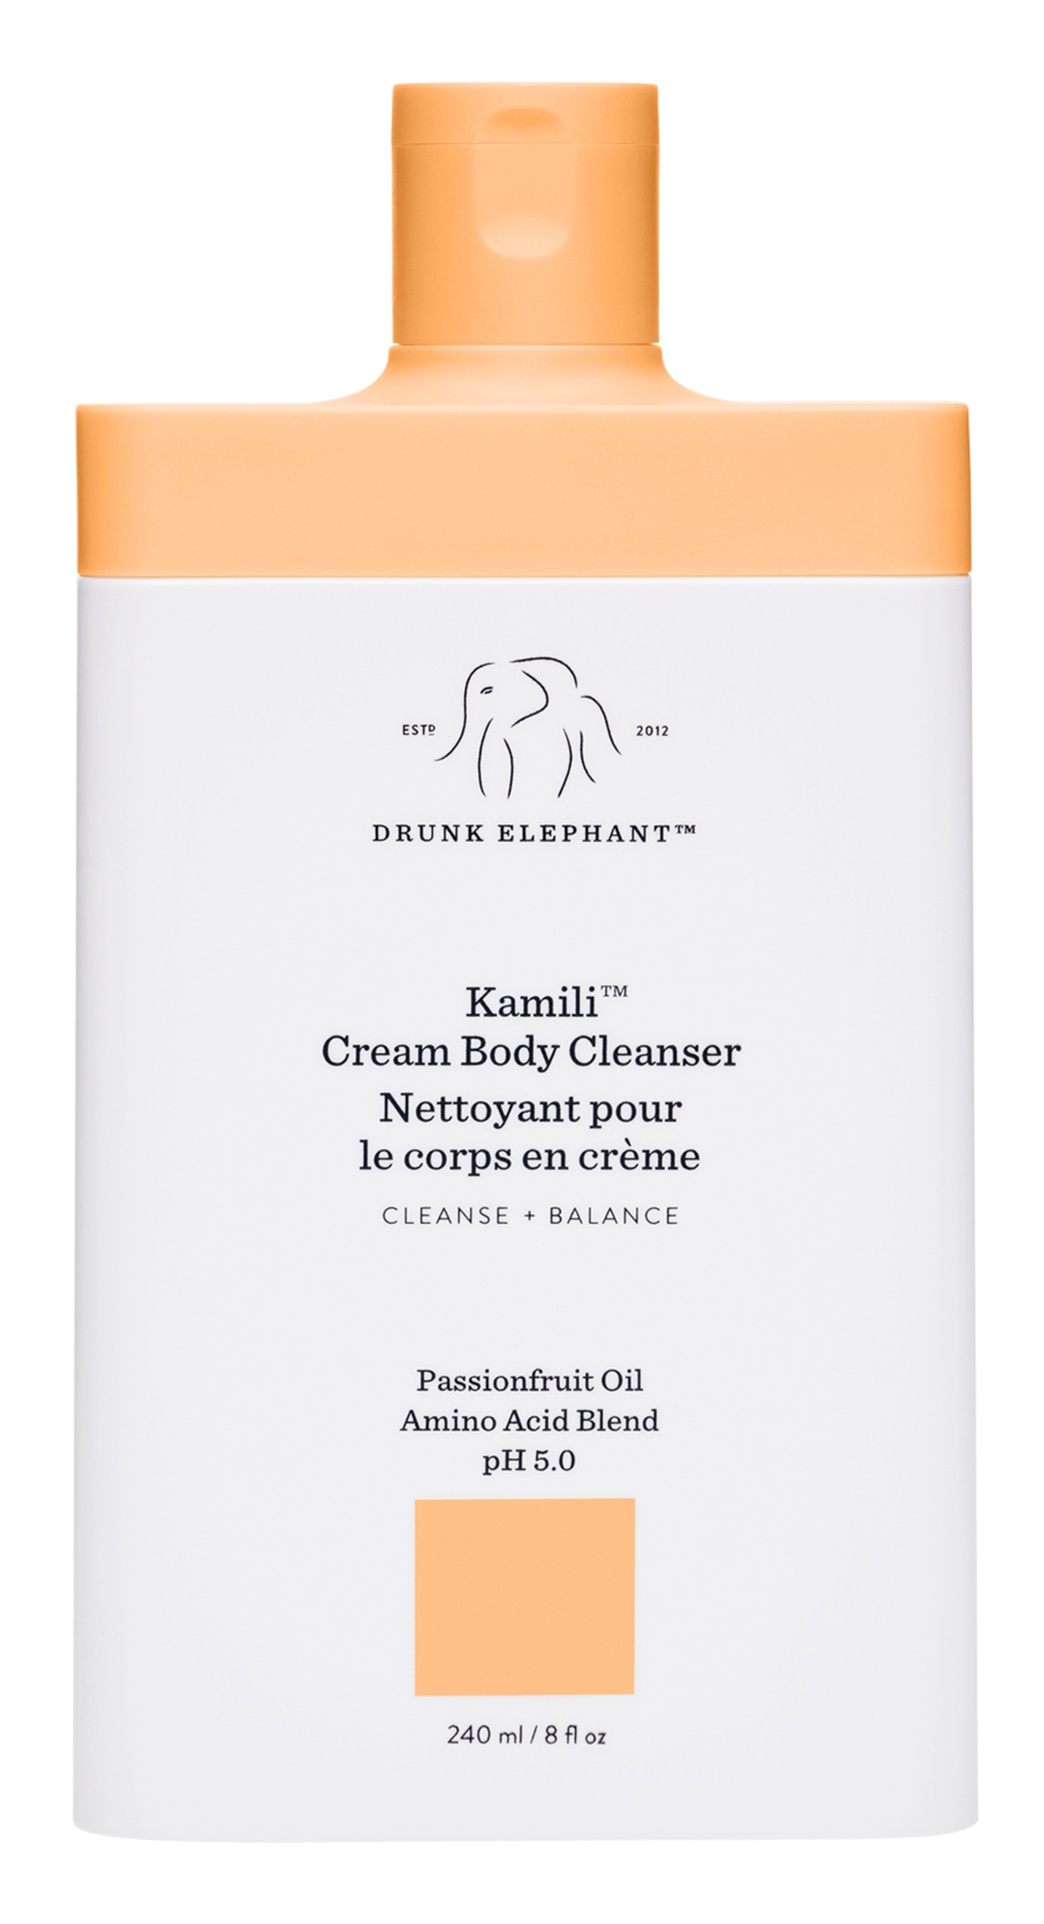 Drunk Elephant Kamili Cream Body Cleanser